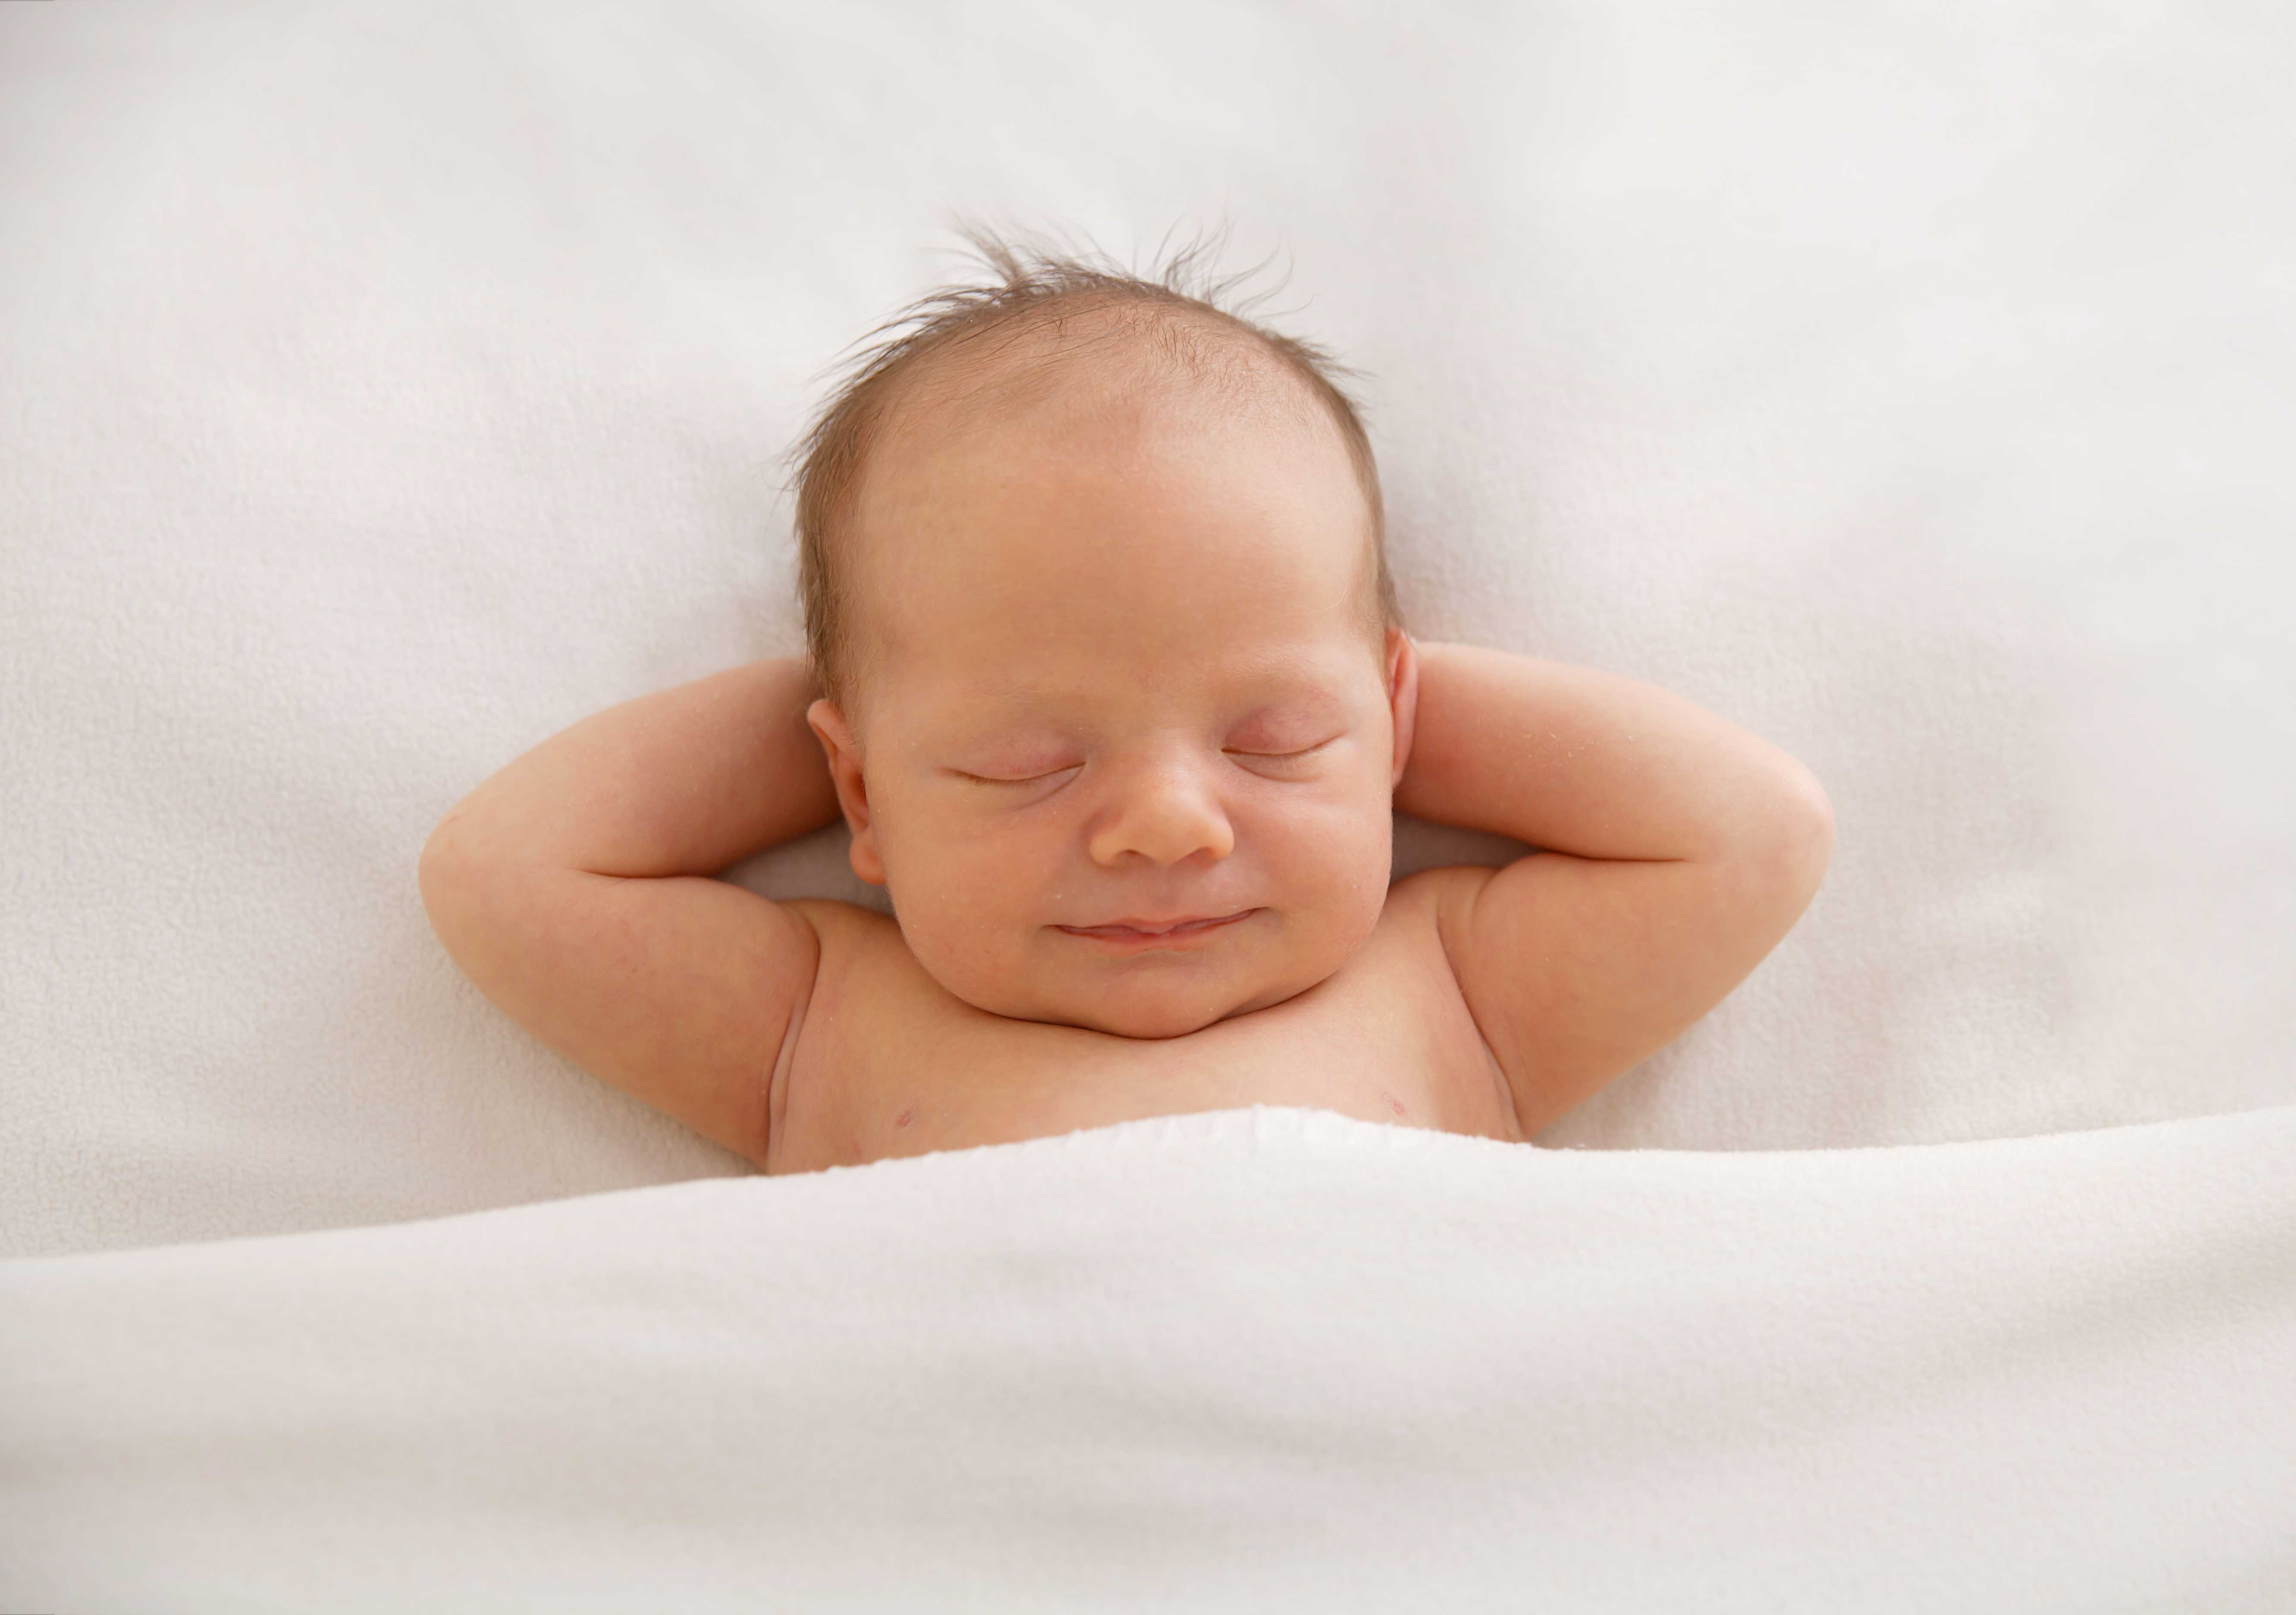 Cute New Born Babies Image Hd Newborn Photography Hull - New Born Baby Cute  - 5324x3744 Wallpaper 